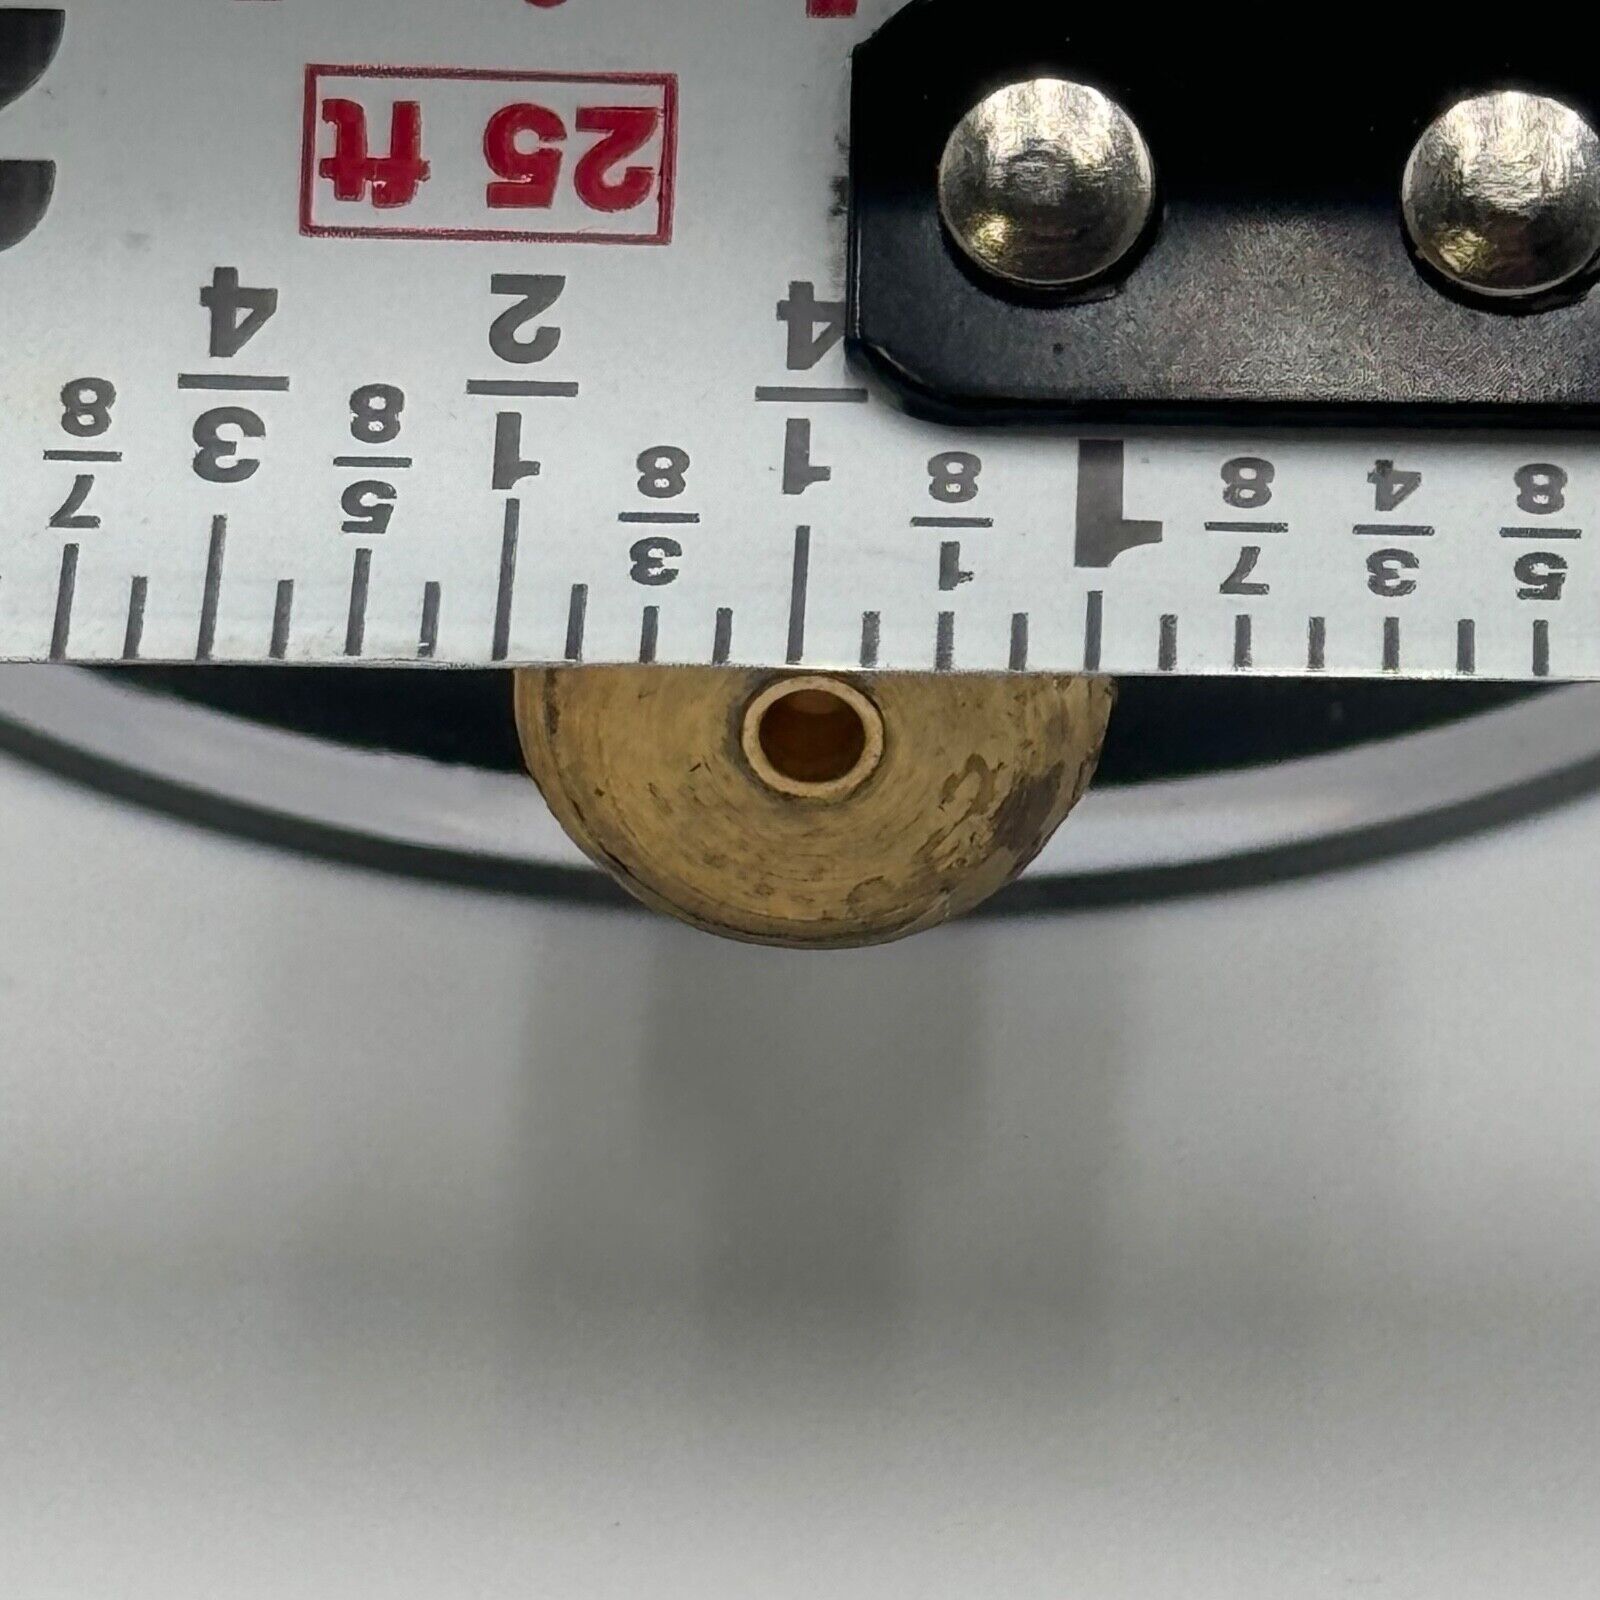 Precision Pressure Gauge SG60 0-60psi 1/2” Bottom Mount 2.5” Face New In Box